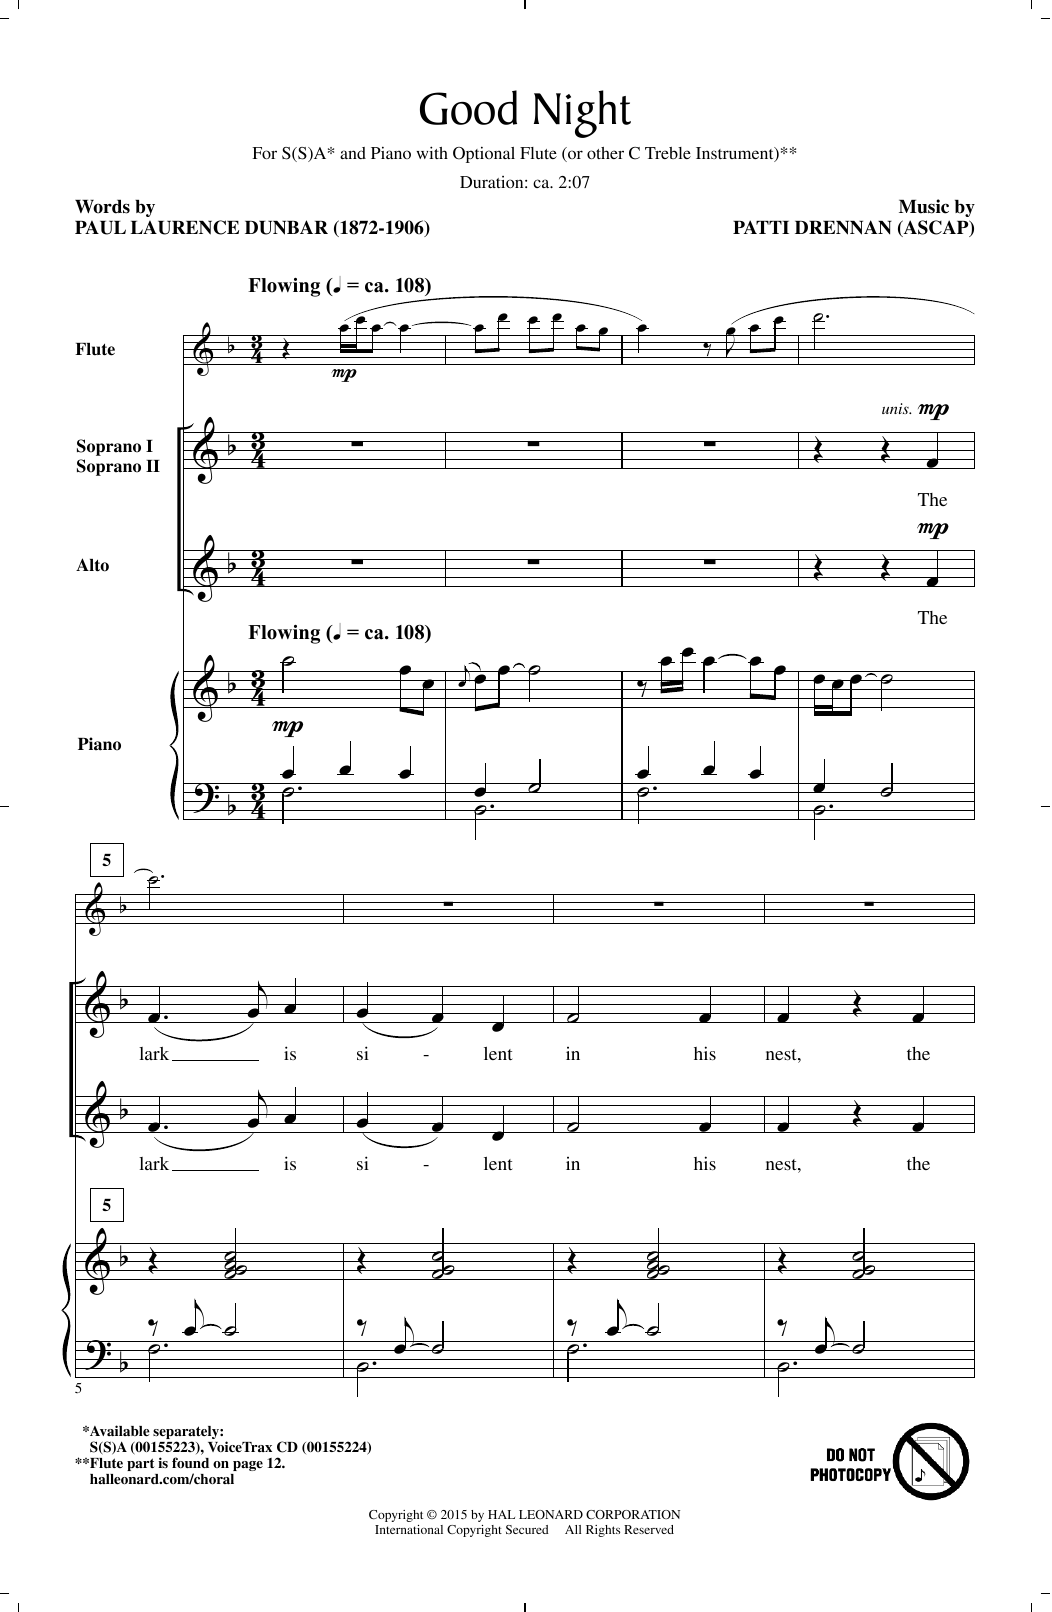 Patti Drennan Good Night Sheet Music Notes & Chords for SSA - Download or Print PDF